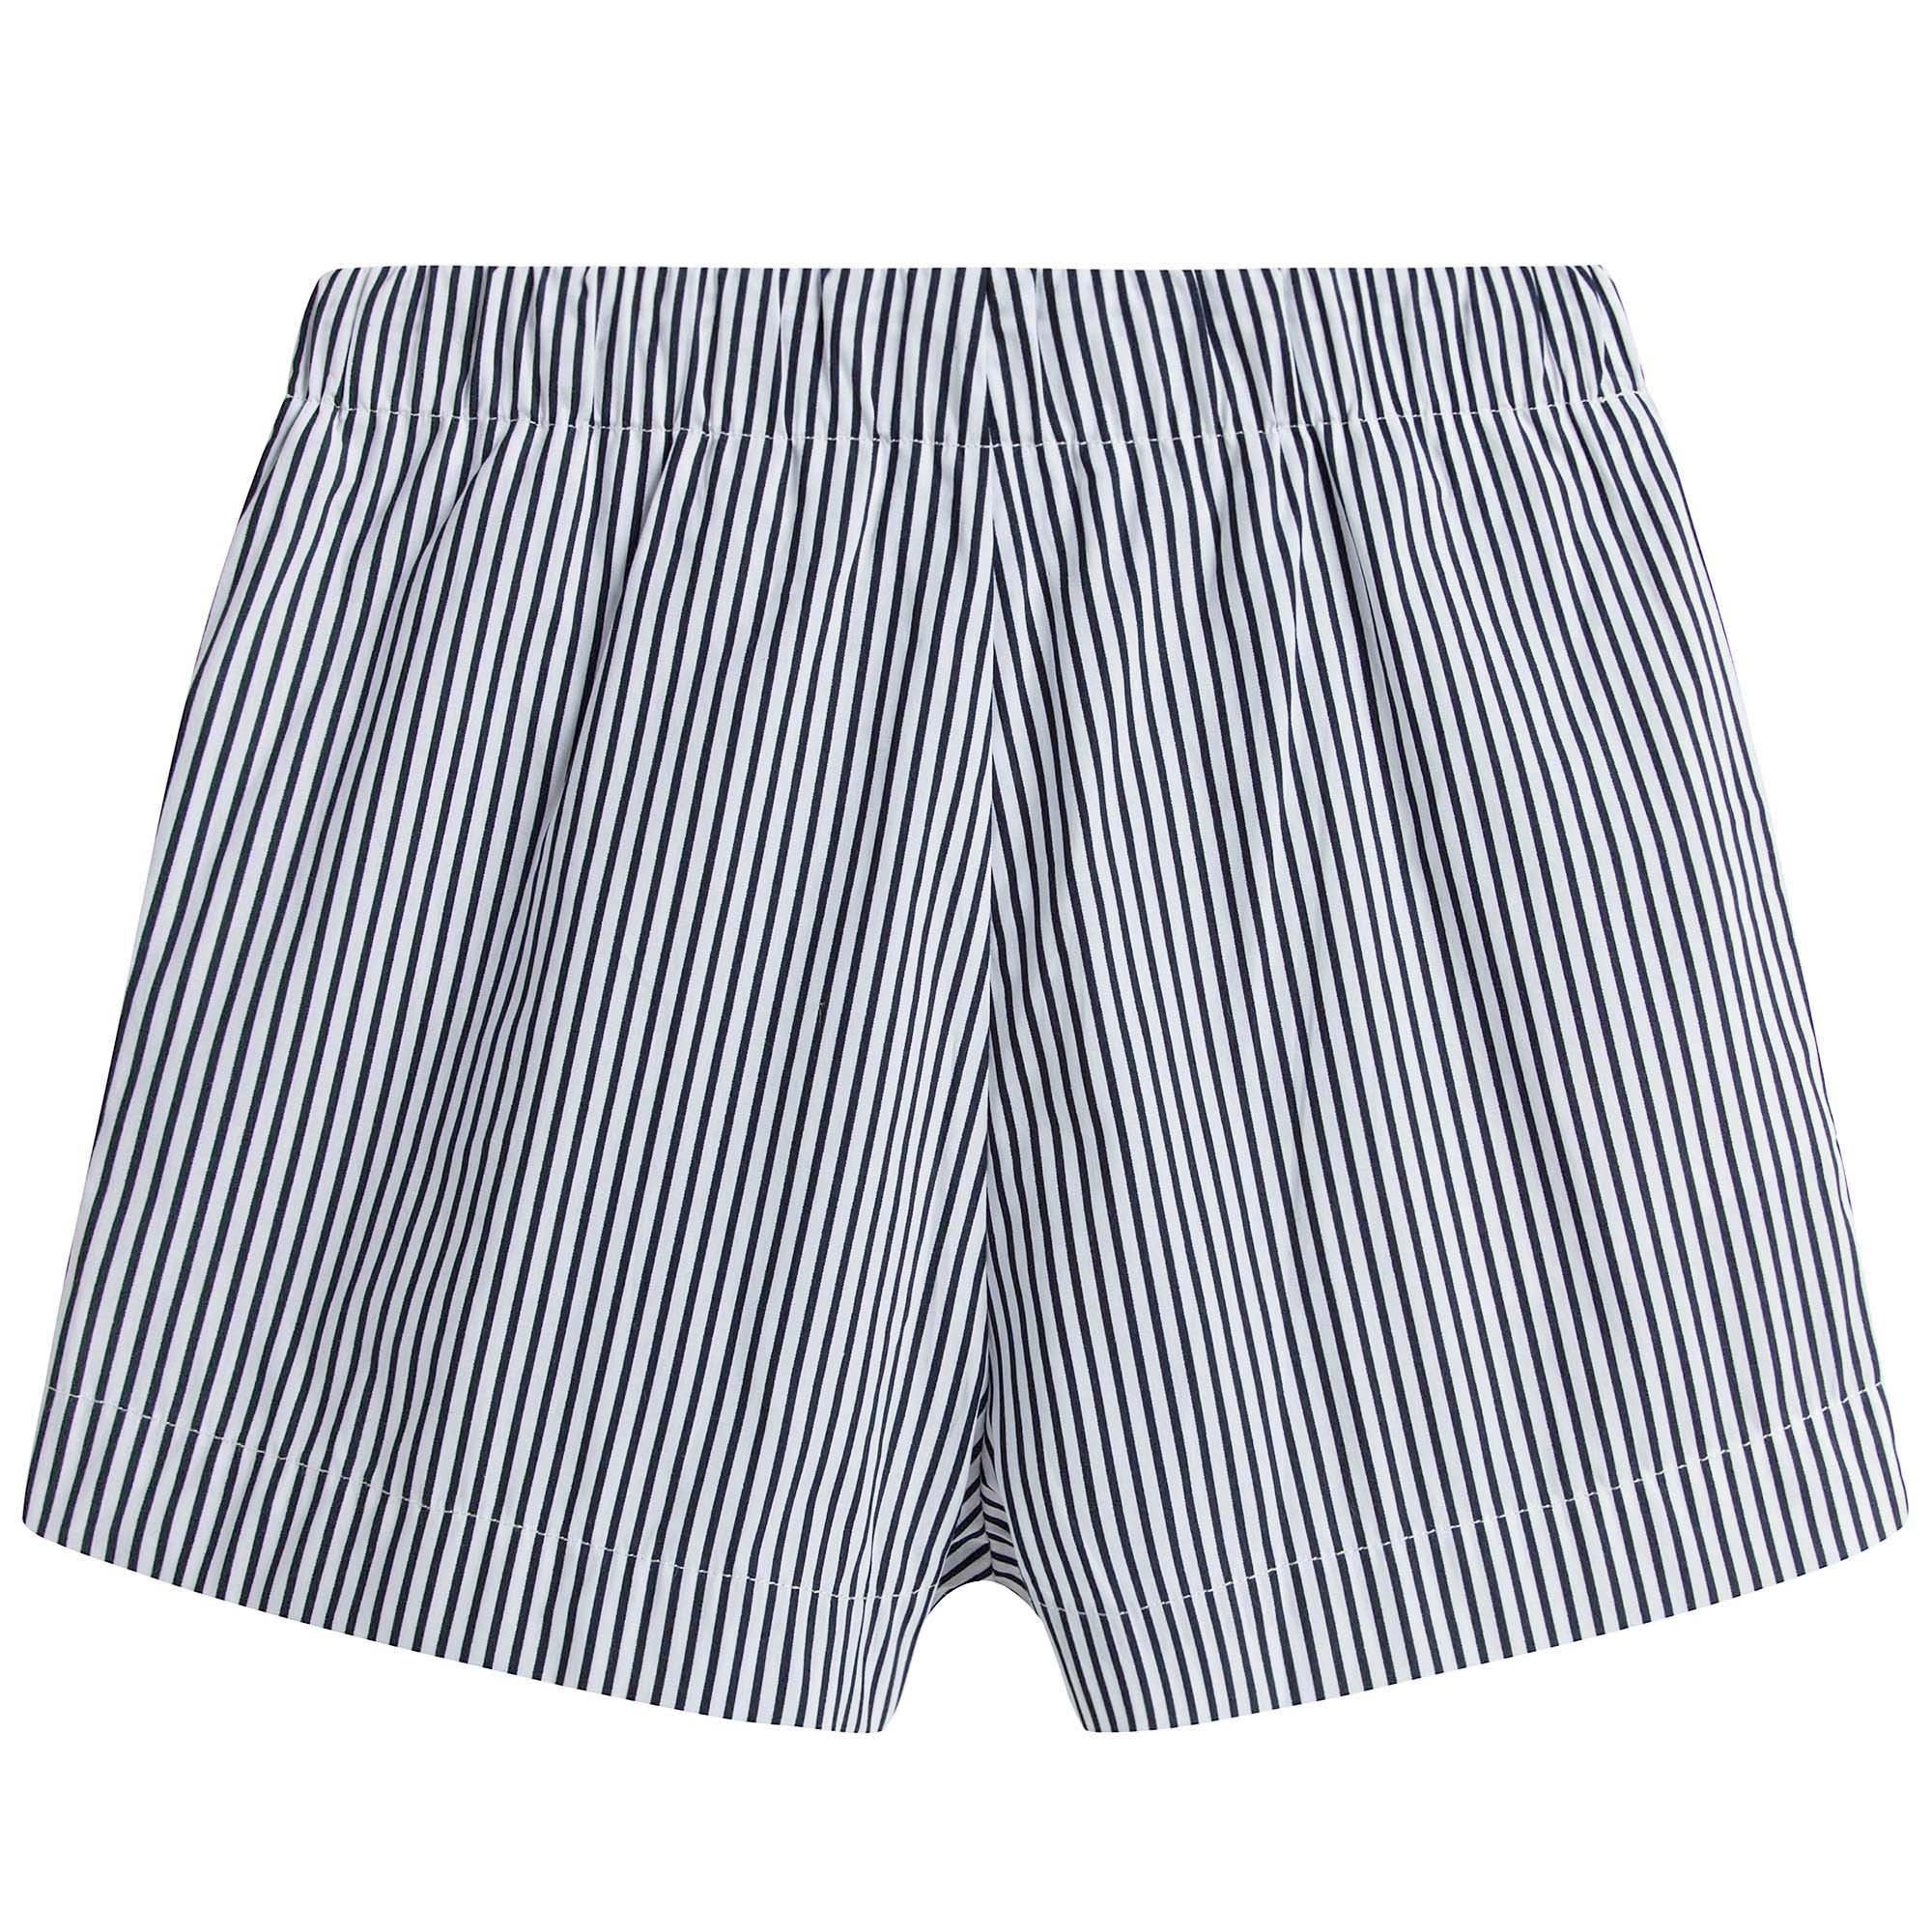 Girls Blue & White Striped Cotton Shorts